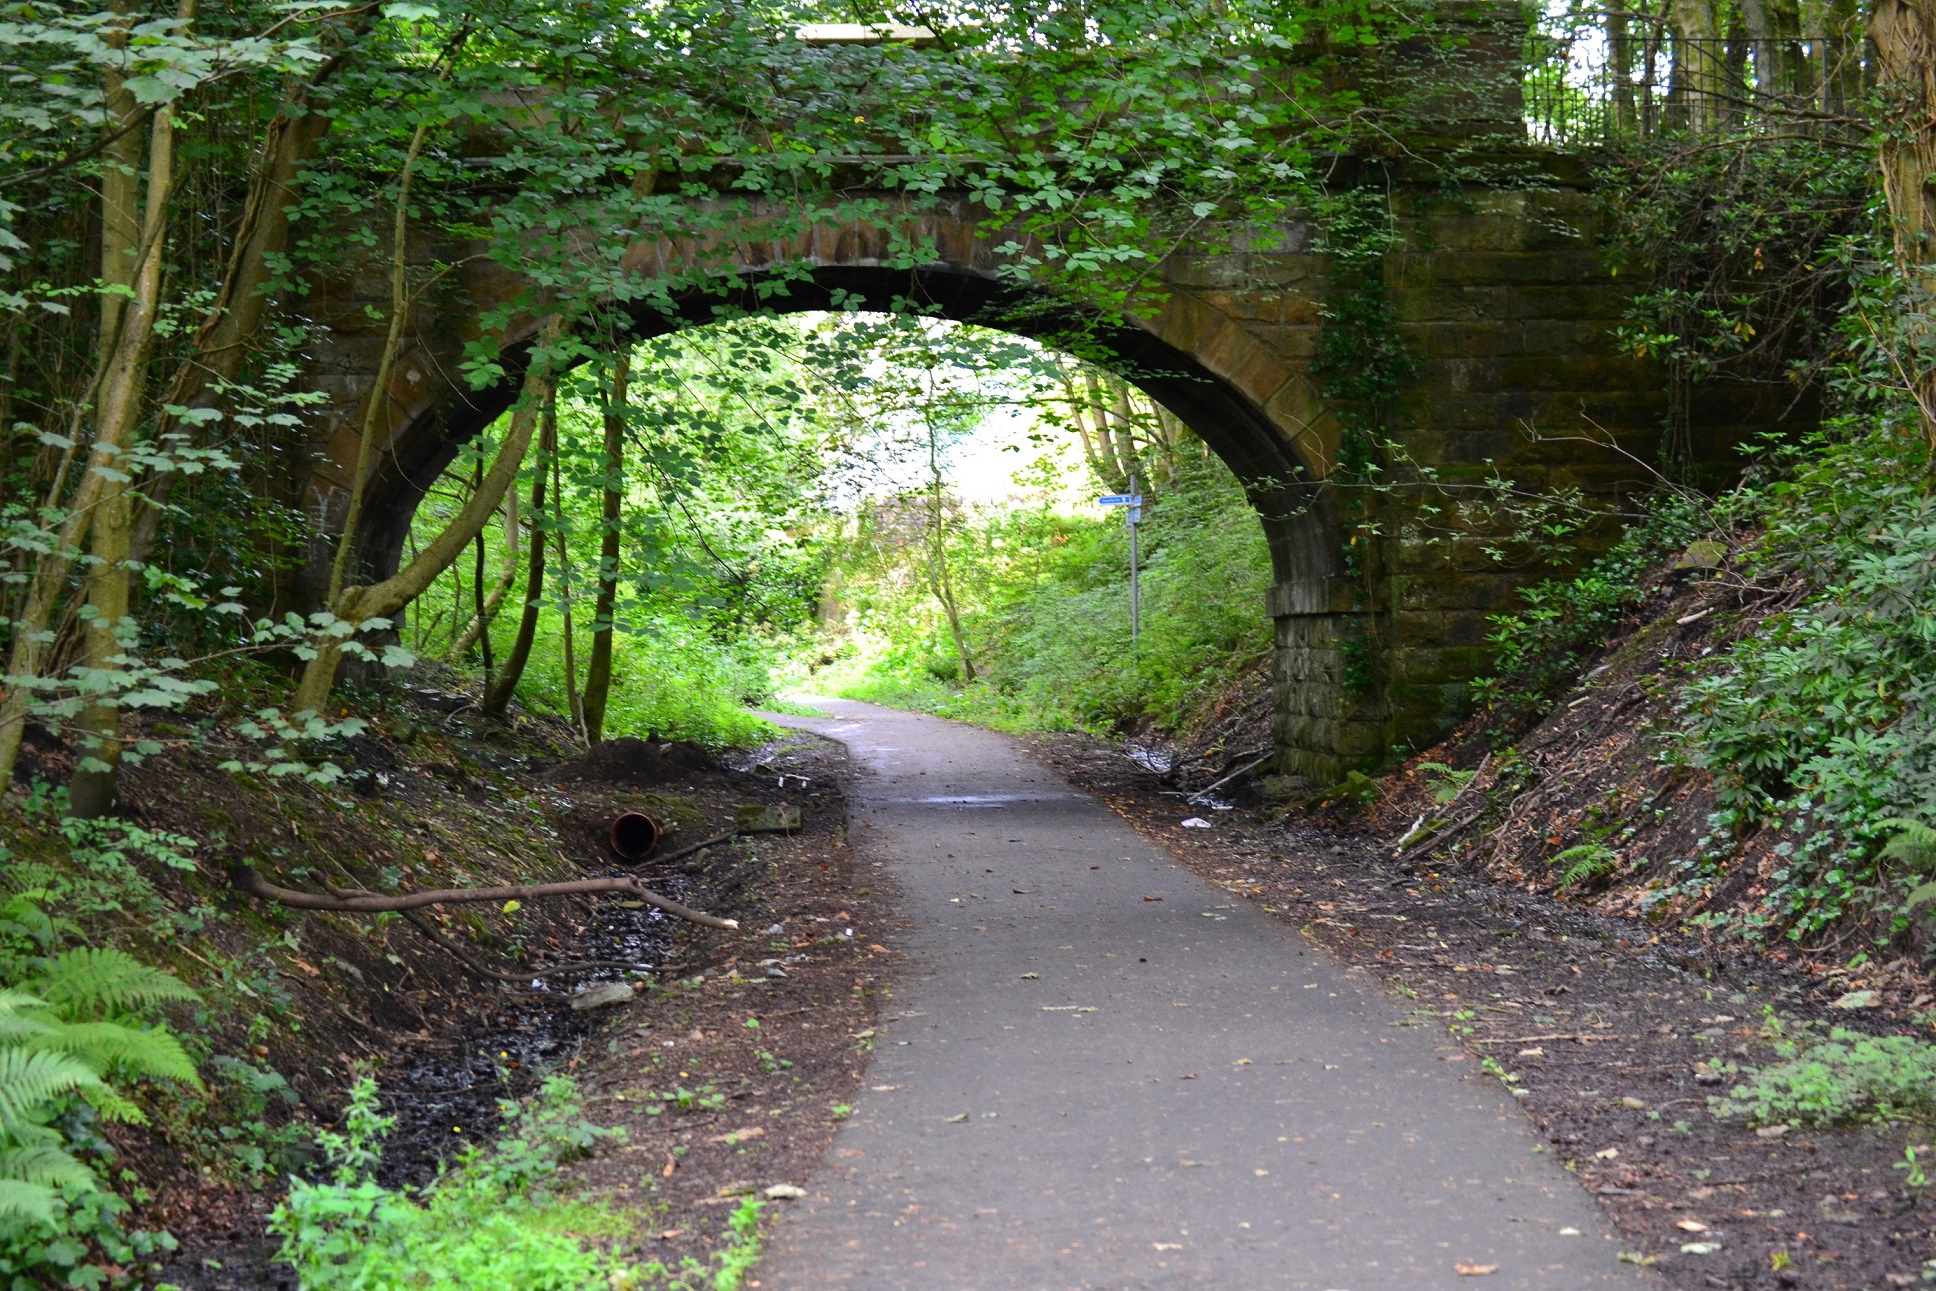 Strathkelvin Railway Path - green verge and path leading under brick railway bridge